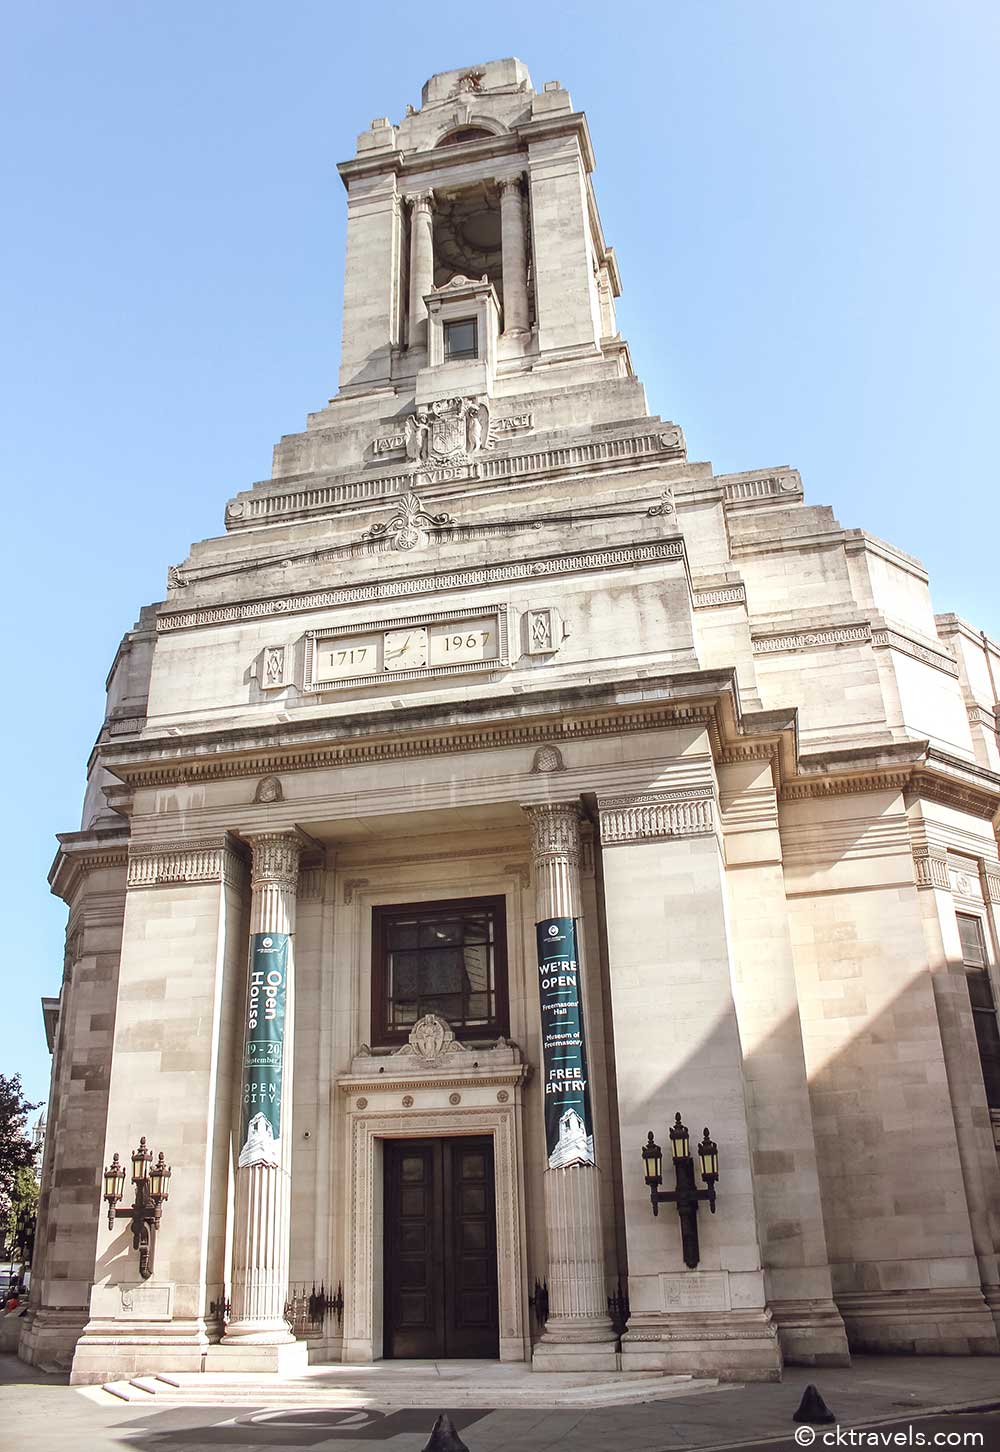 Museum of Freemasonry at the Masonic Hall Covent Garden